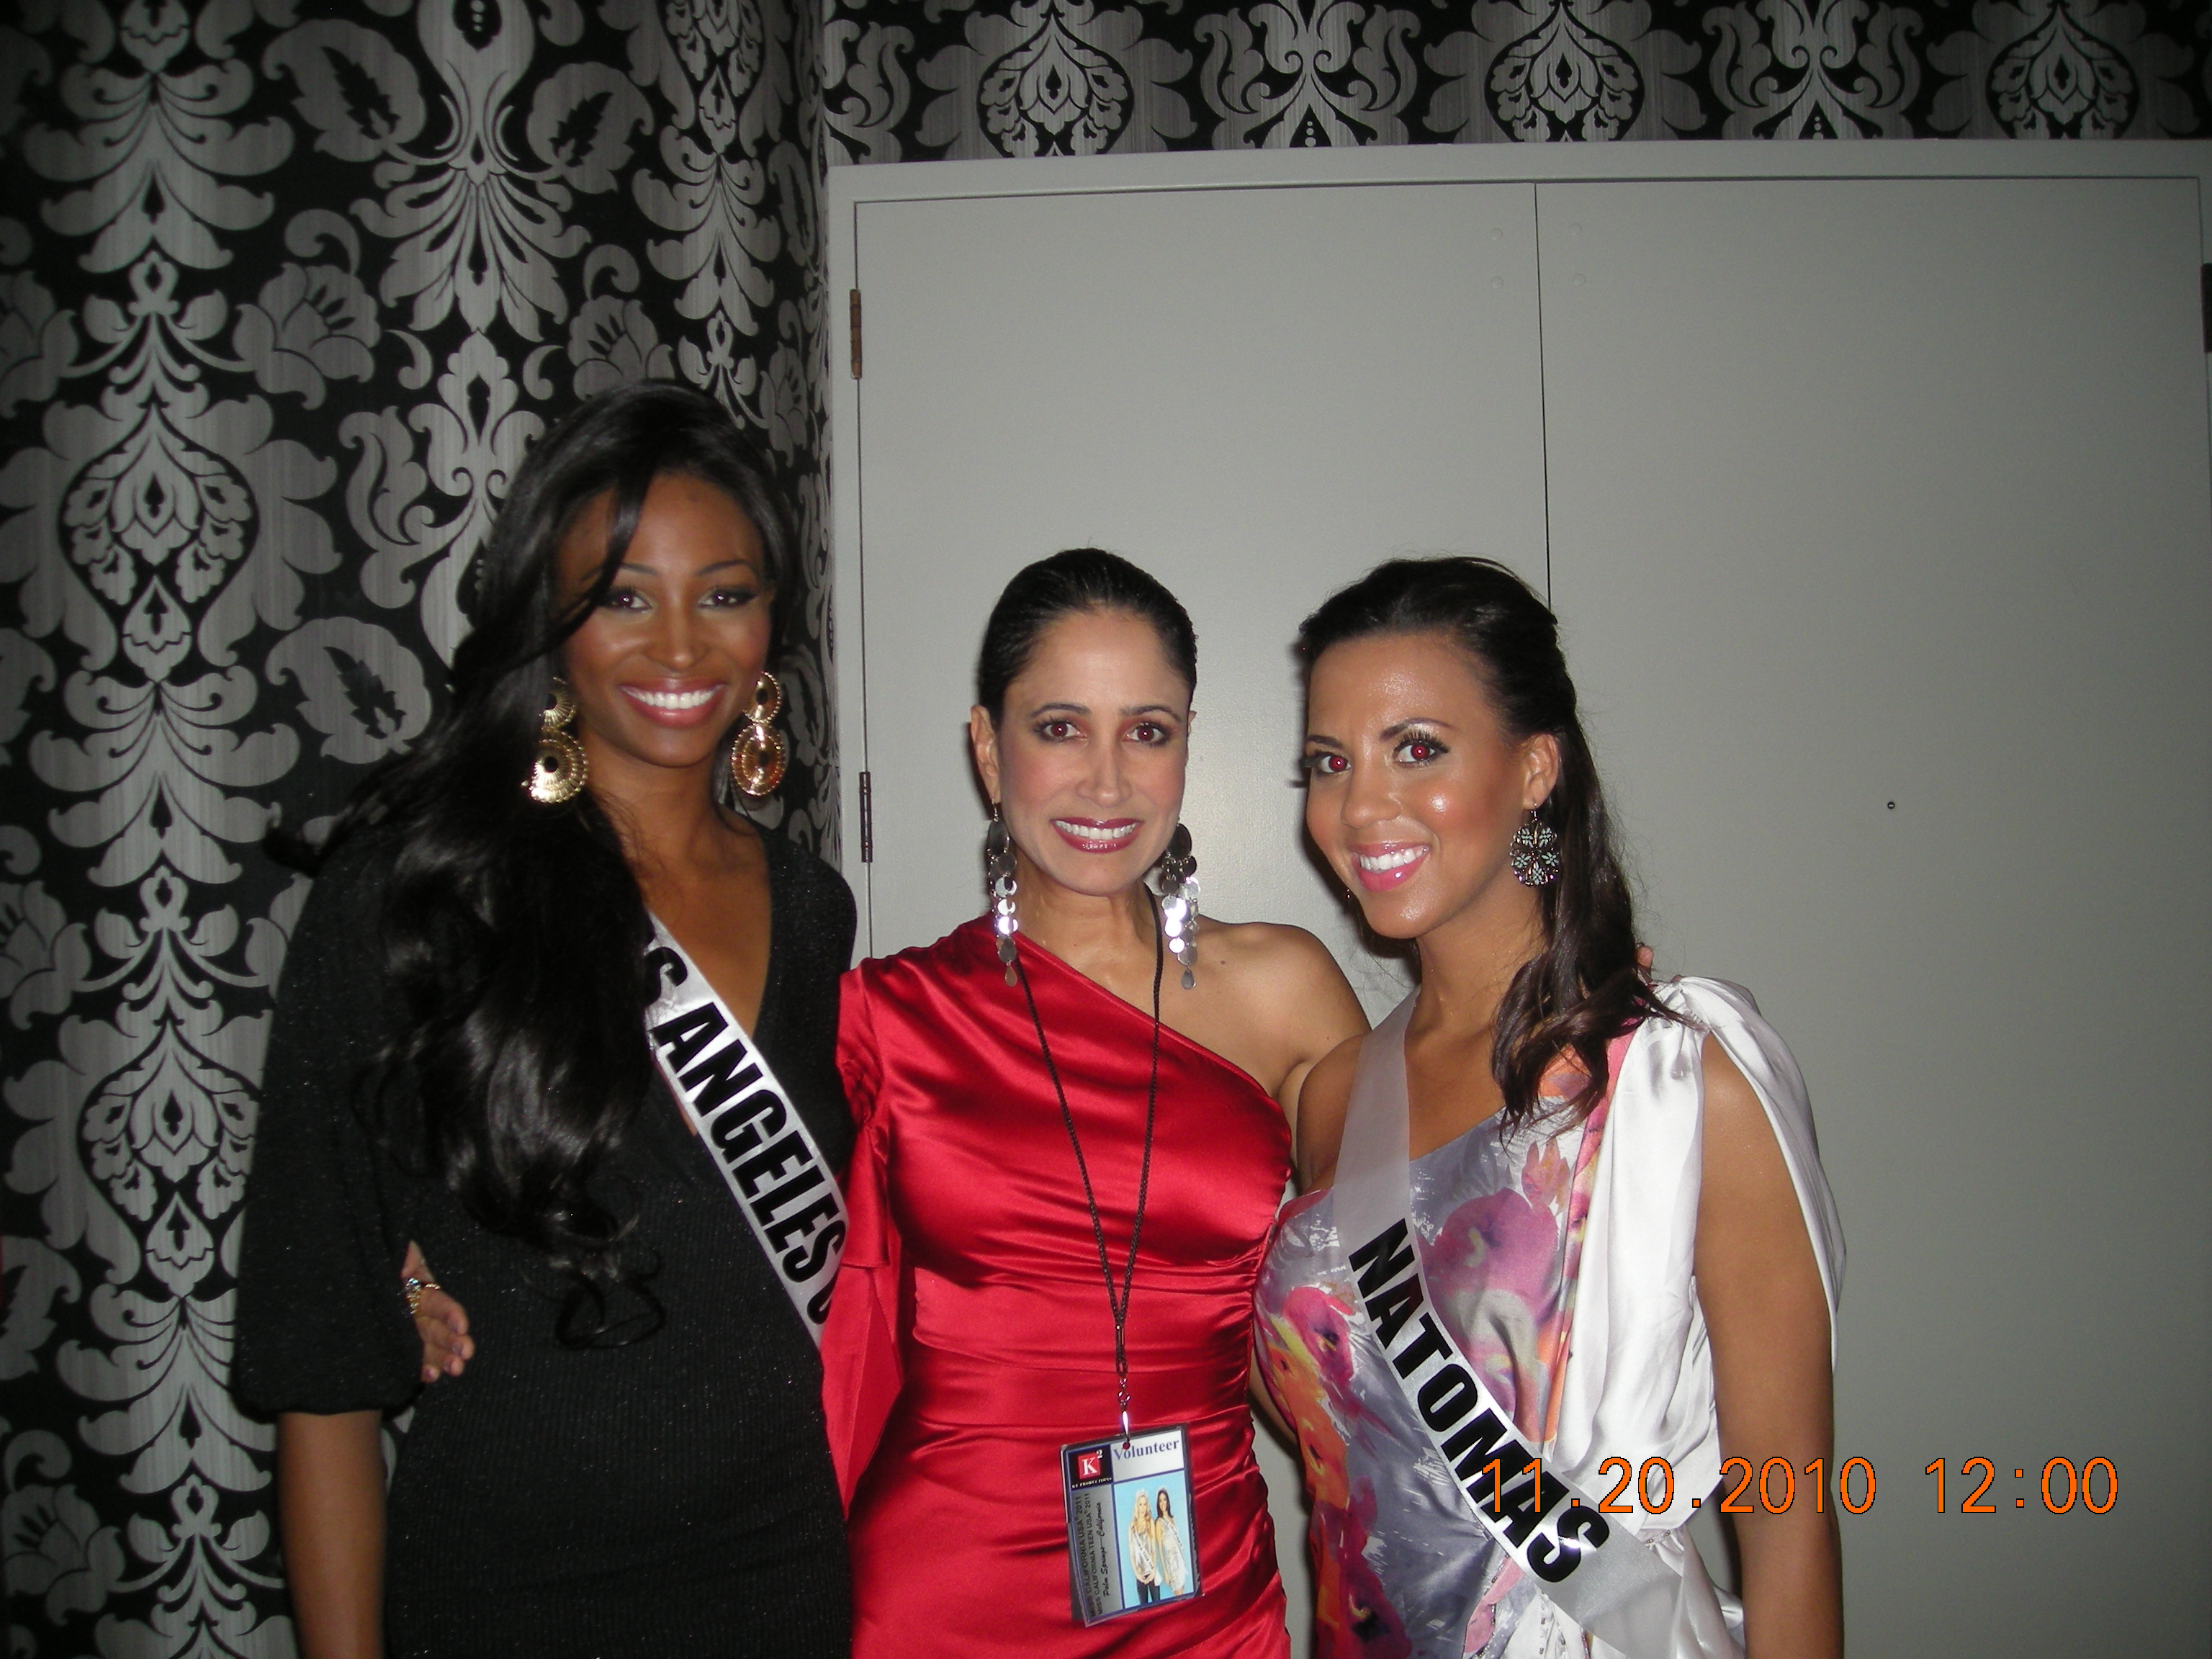 with Nana Meriweather, Miss USA 2012